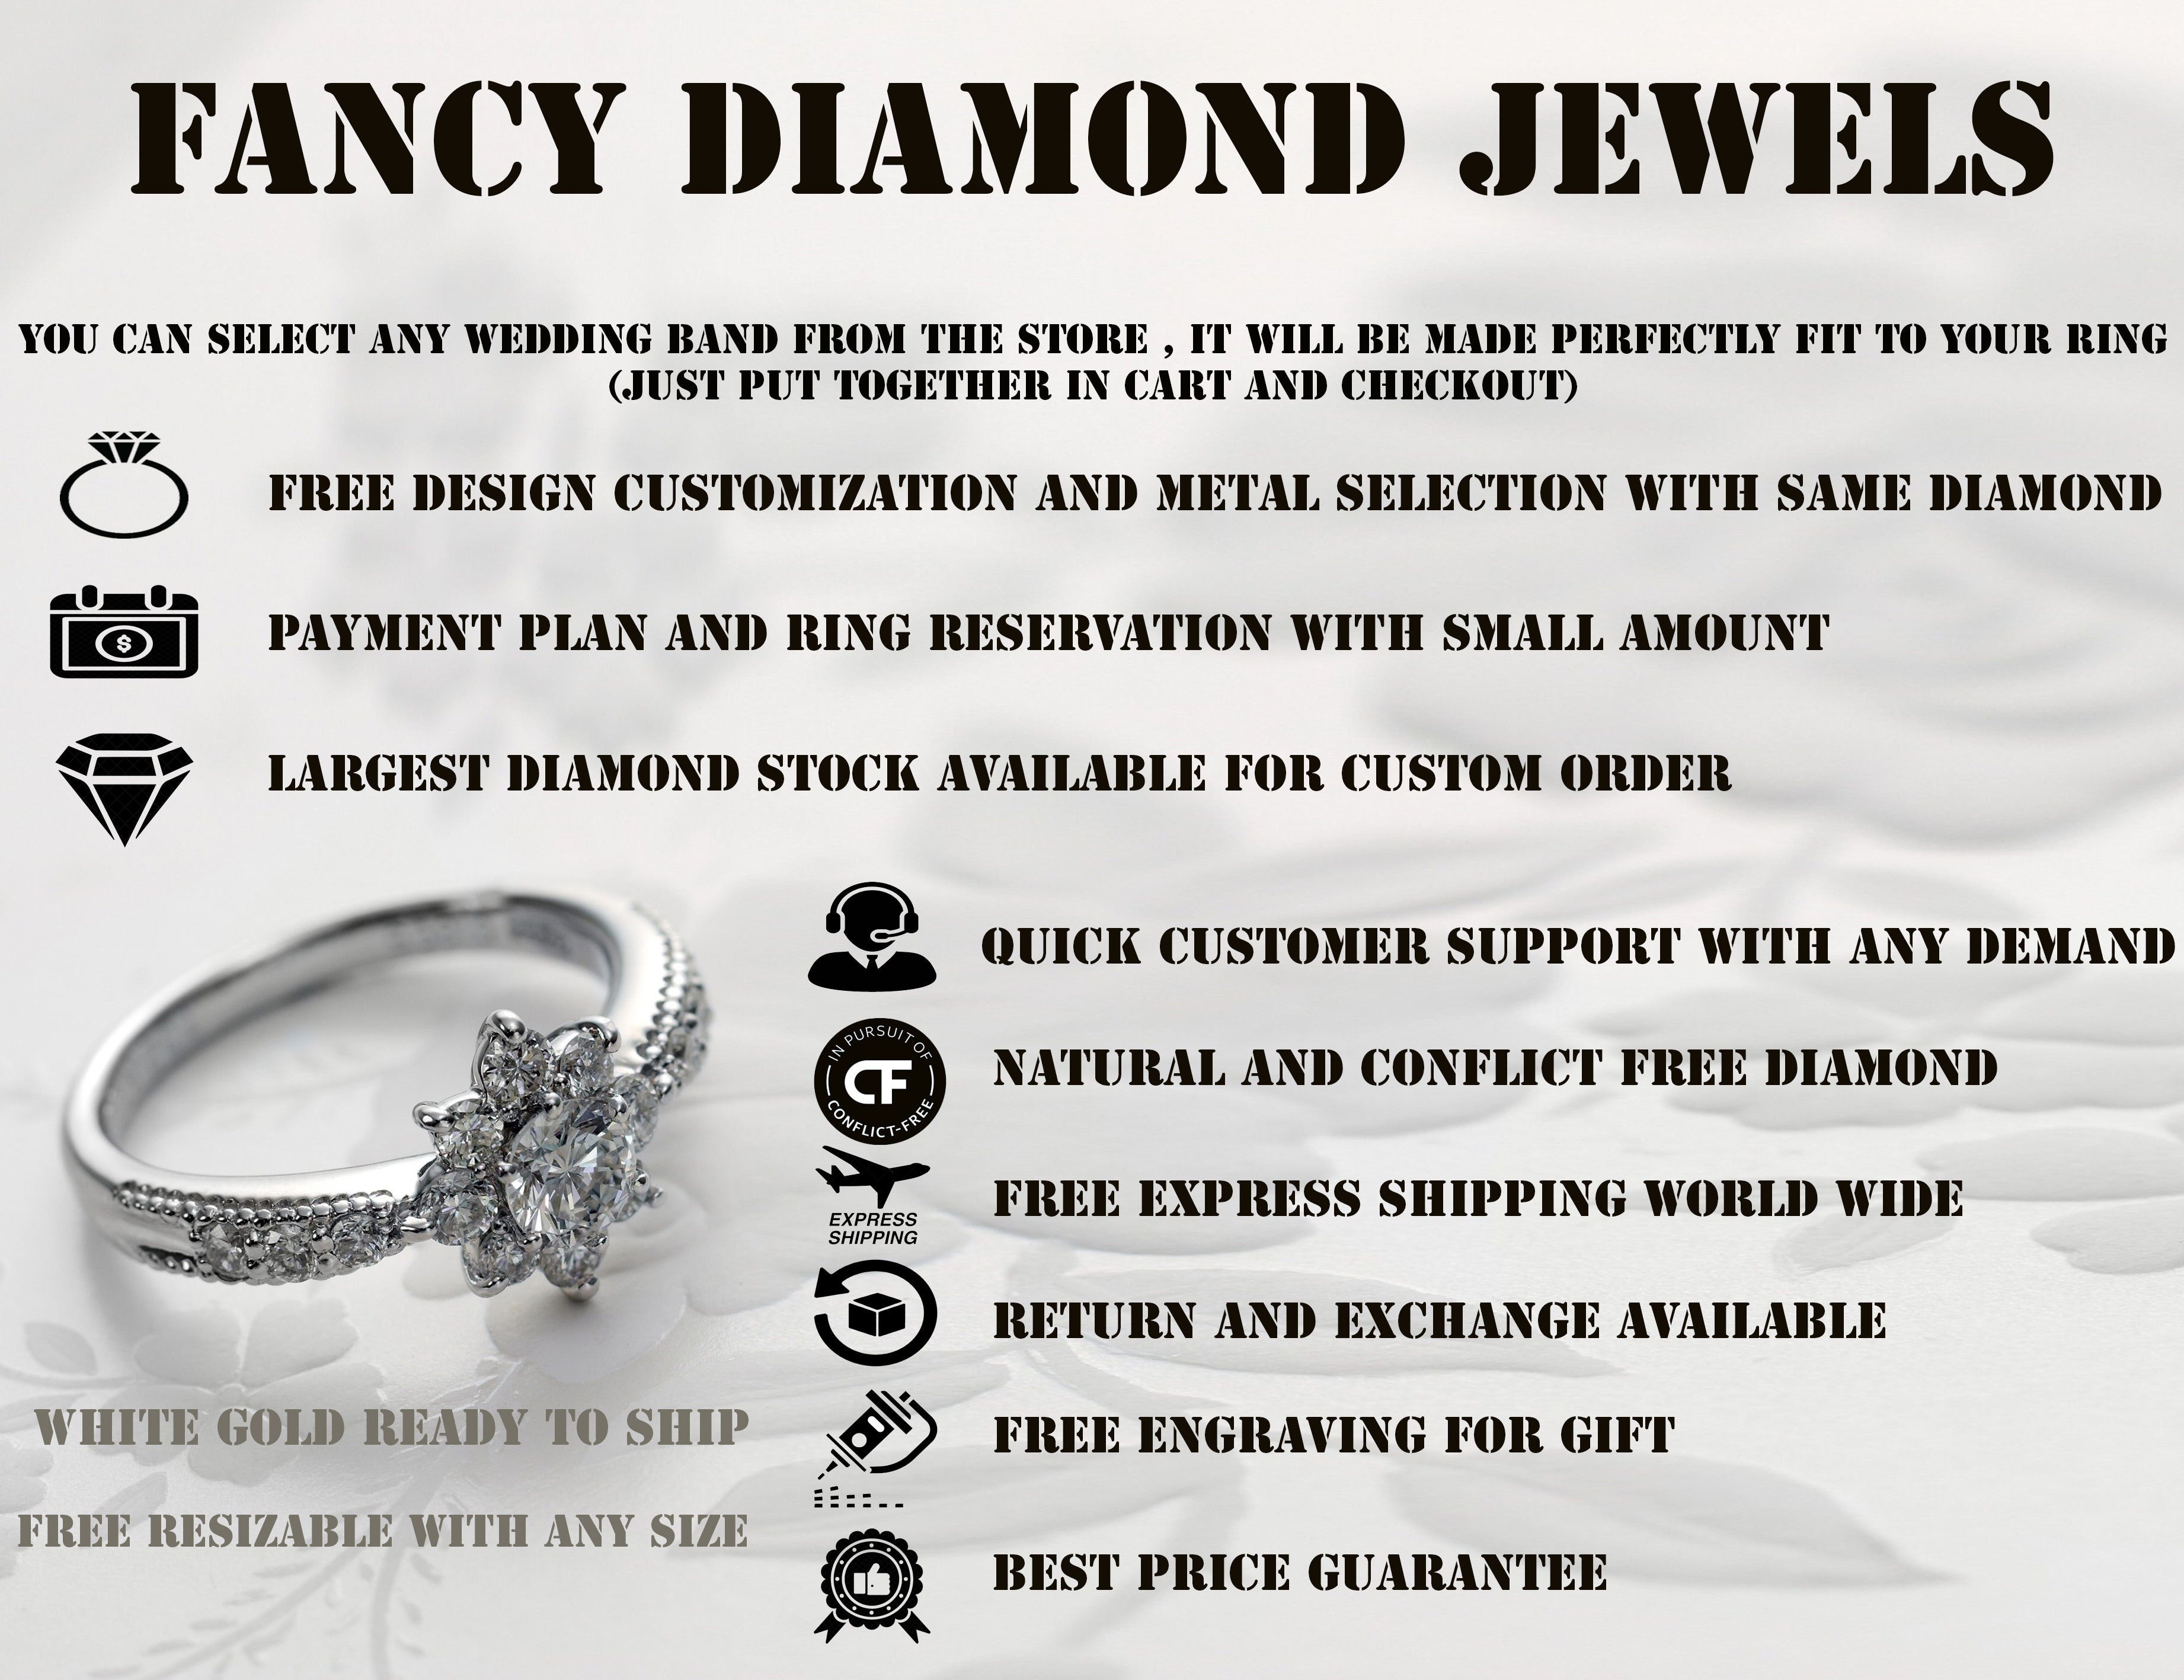 0.22 Ct, Men's Wedding Ring, White Diamond Band, Ring For Men, Round Diamond Band, Unique Men's Ring, Gift For Him KD933